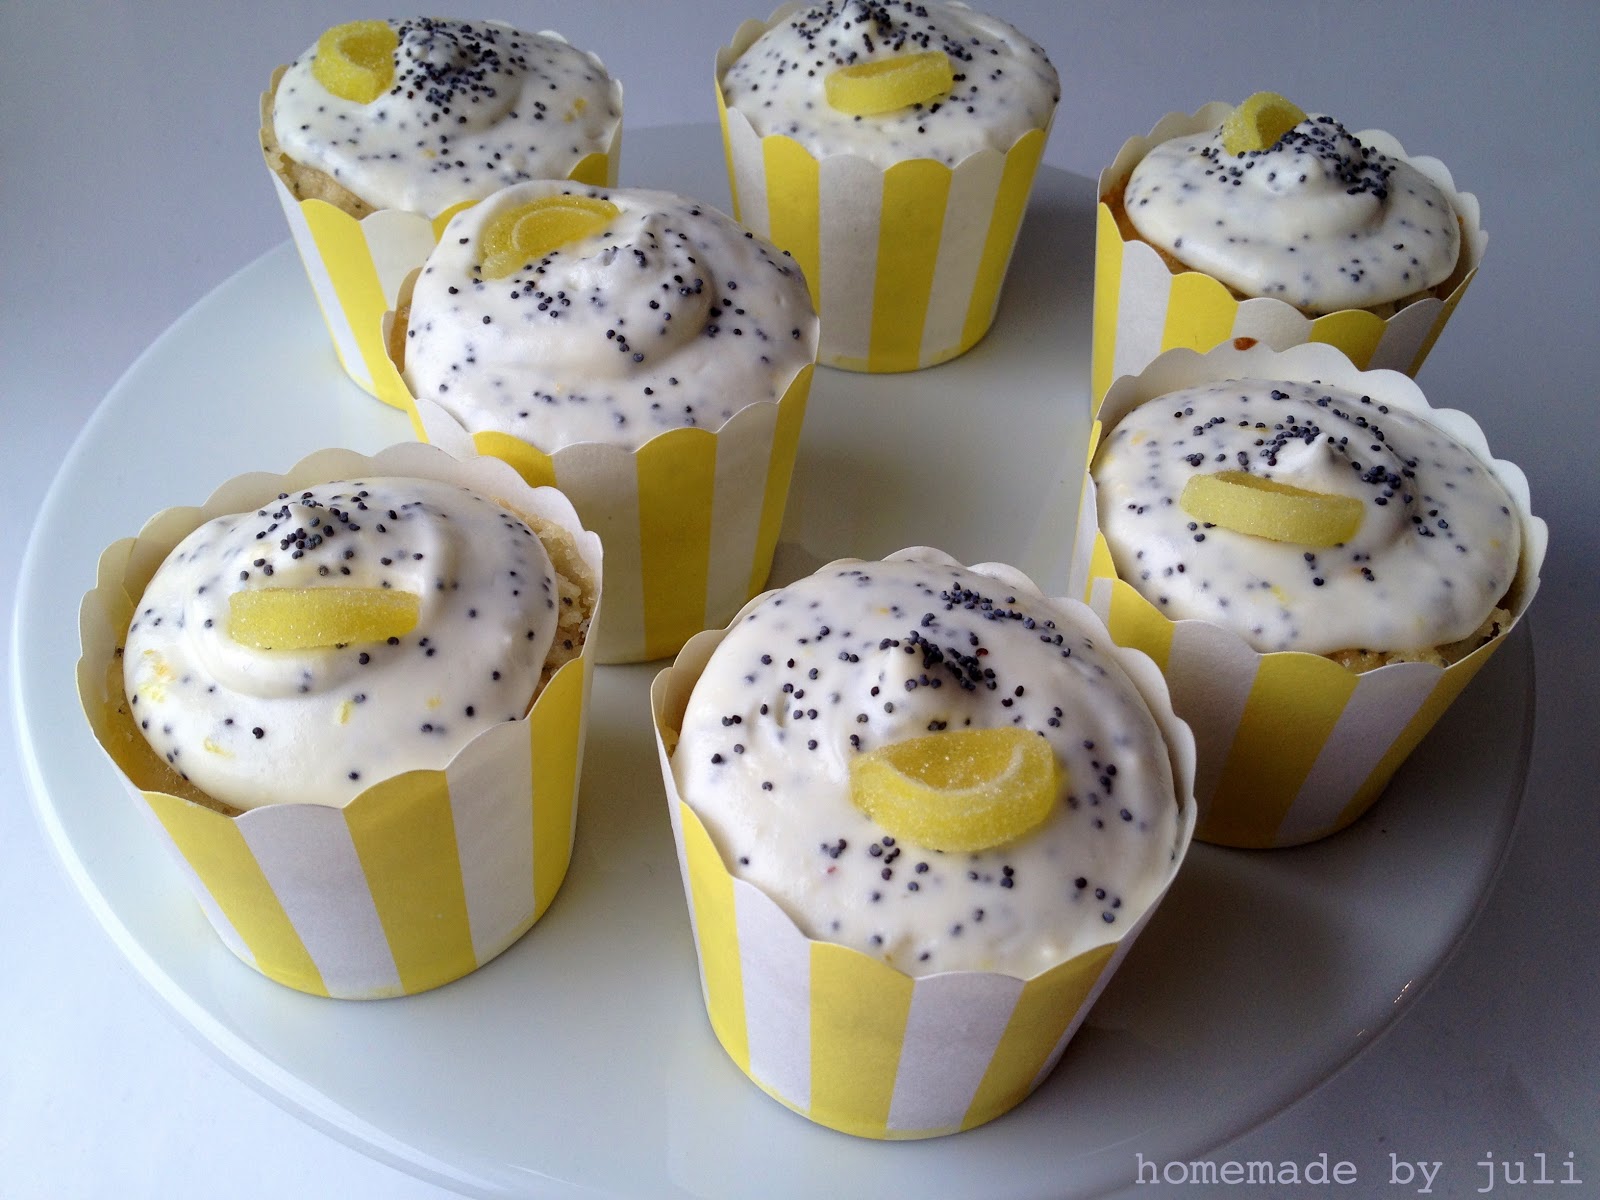 HOMEMADE by Juli: Zitrone Mohn Cupcakes